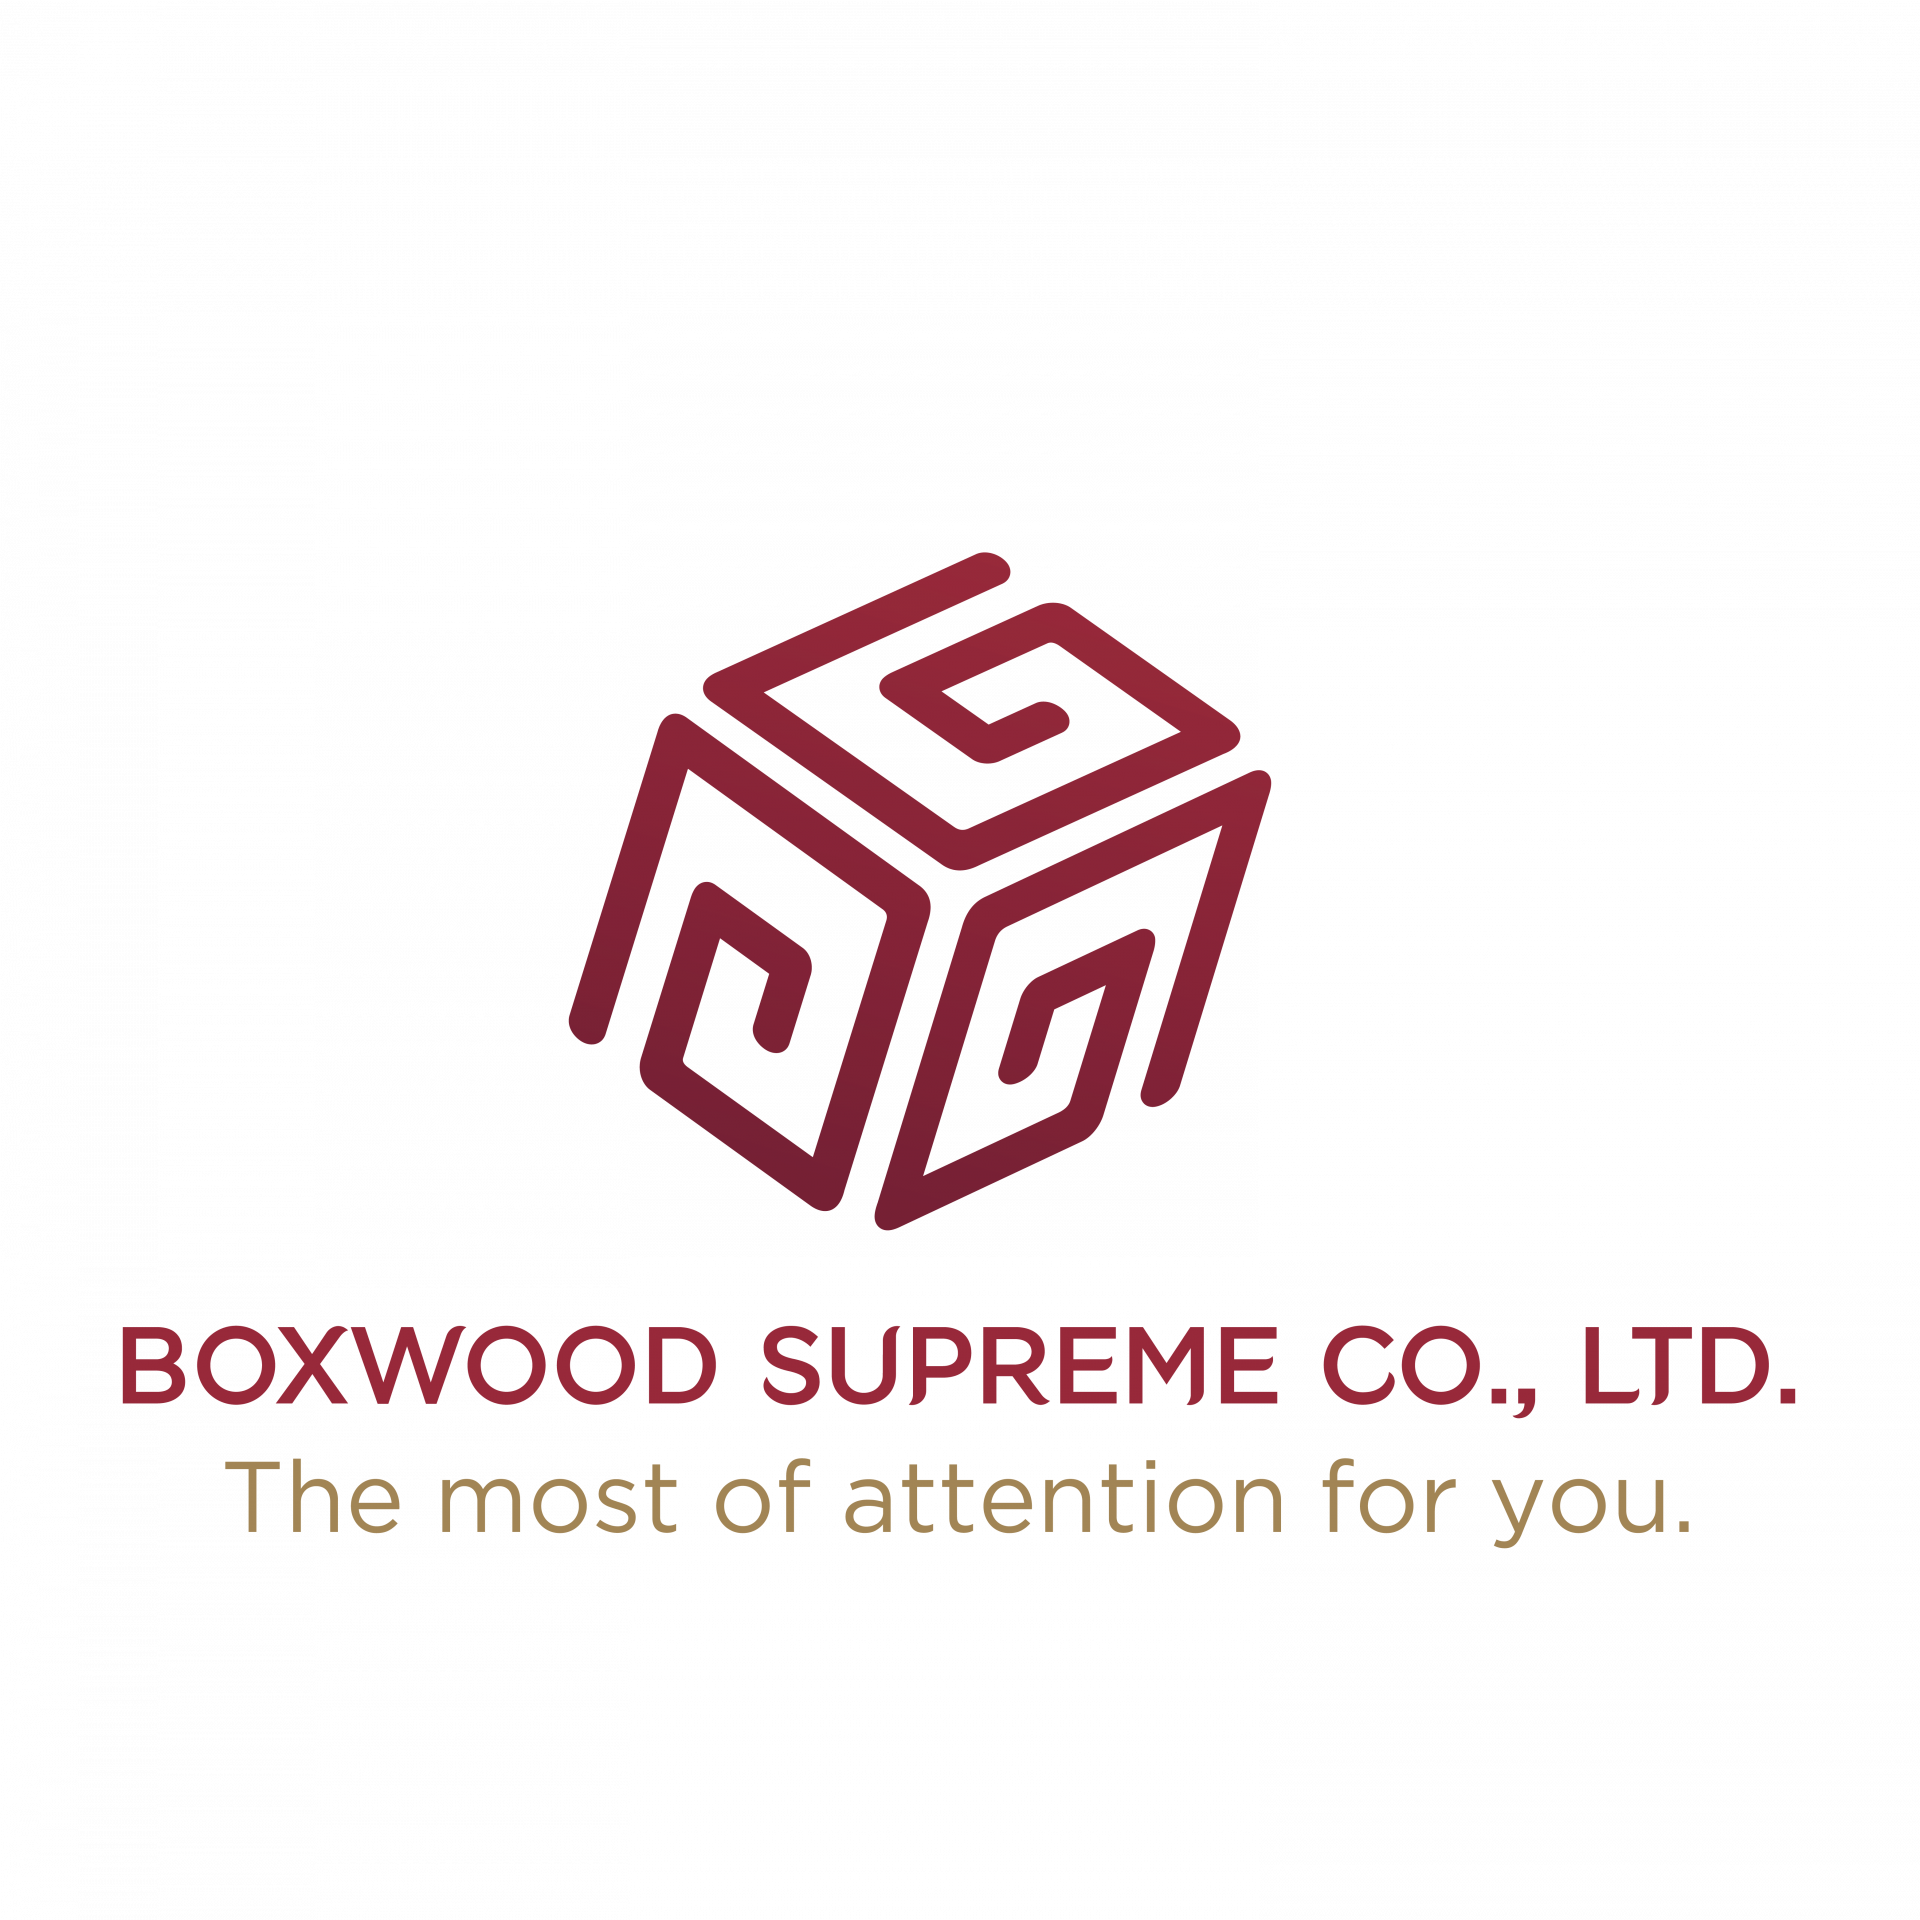 Boxwood Supreme